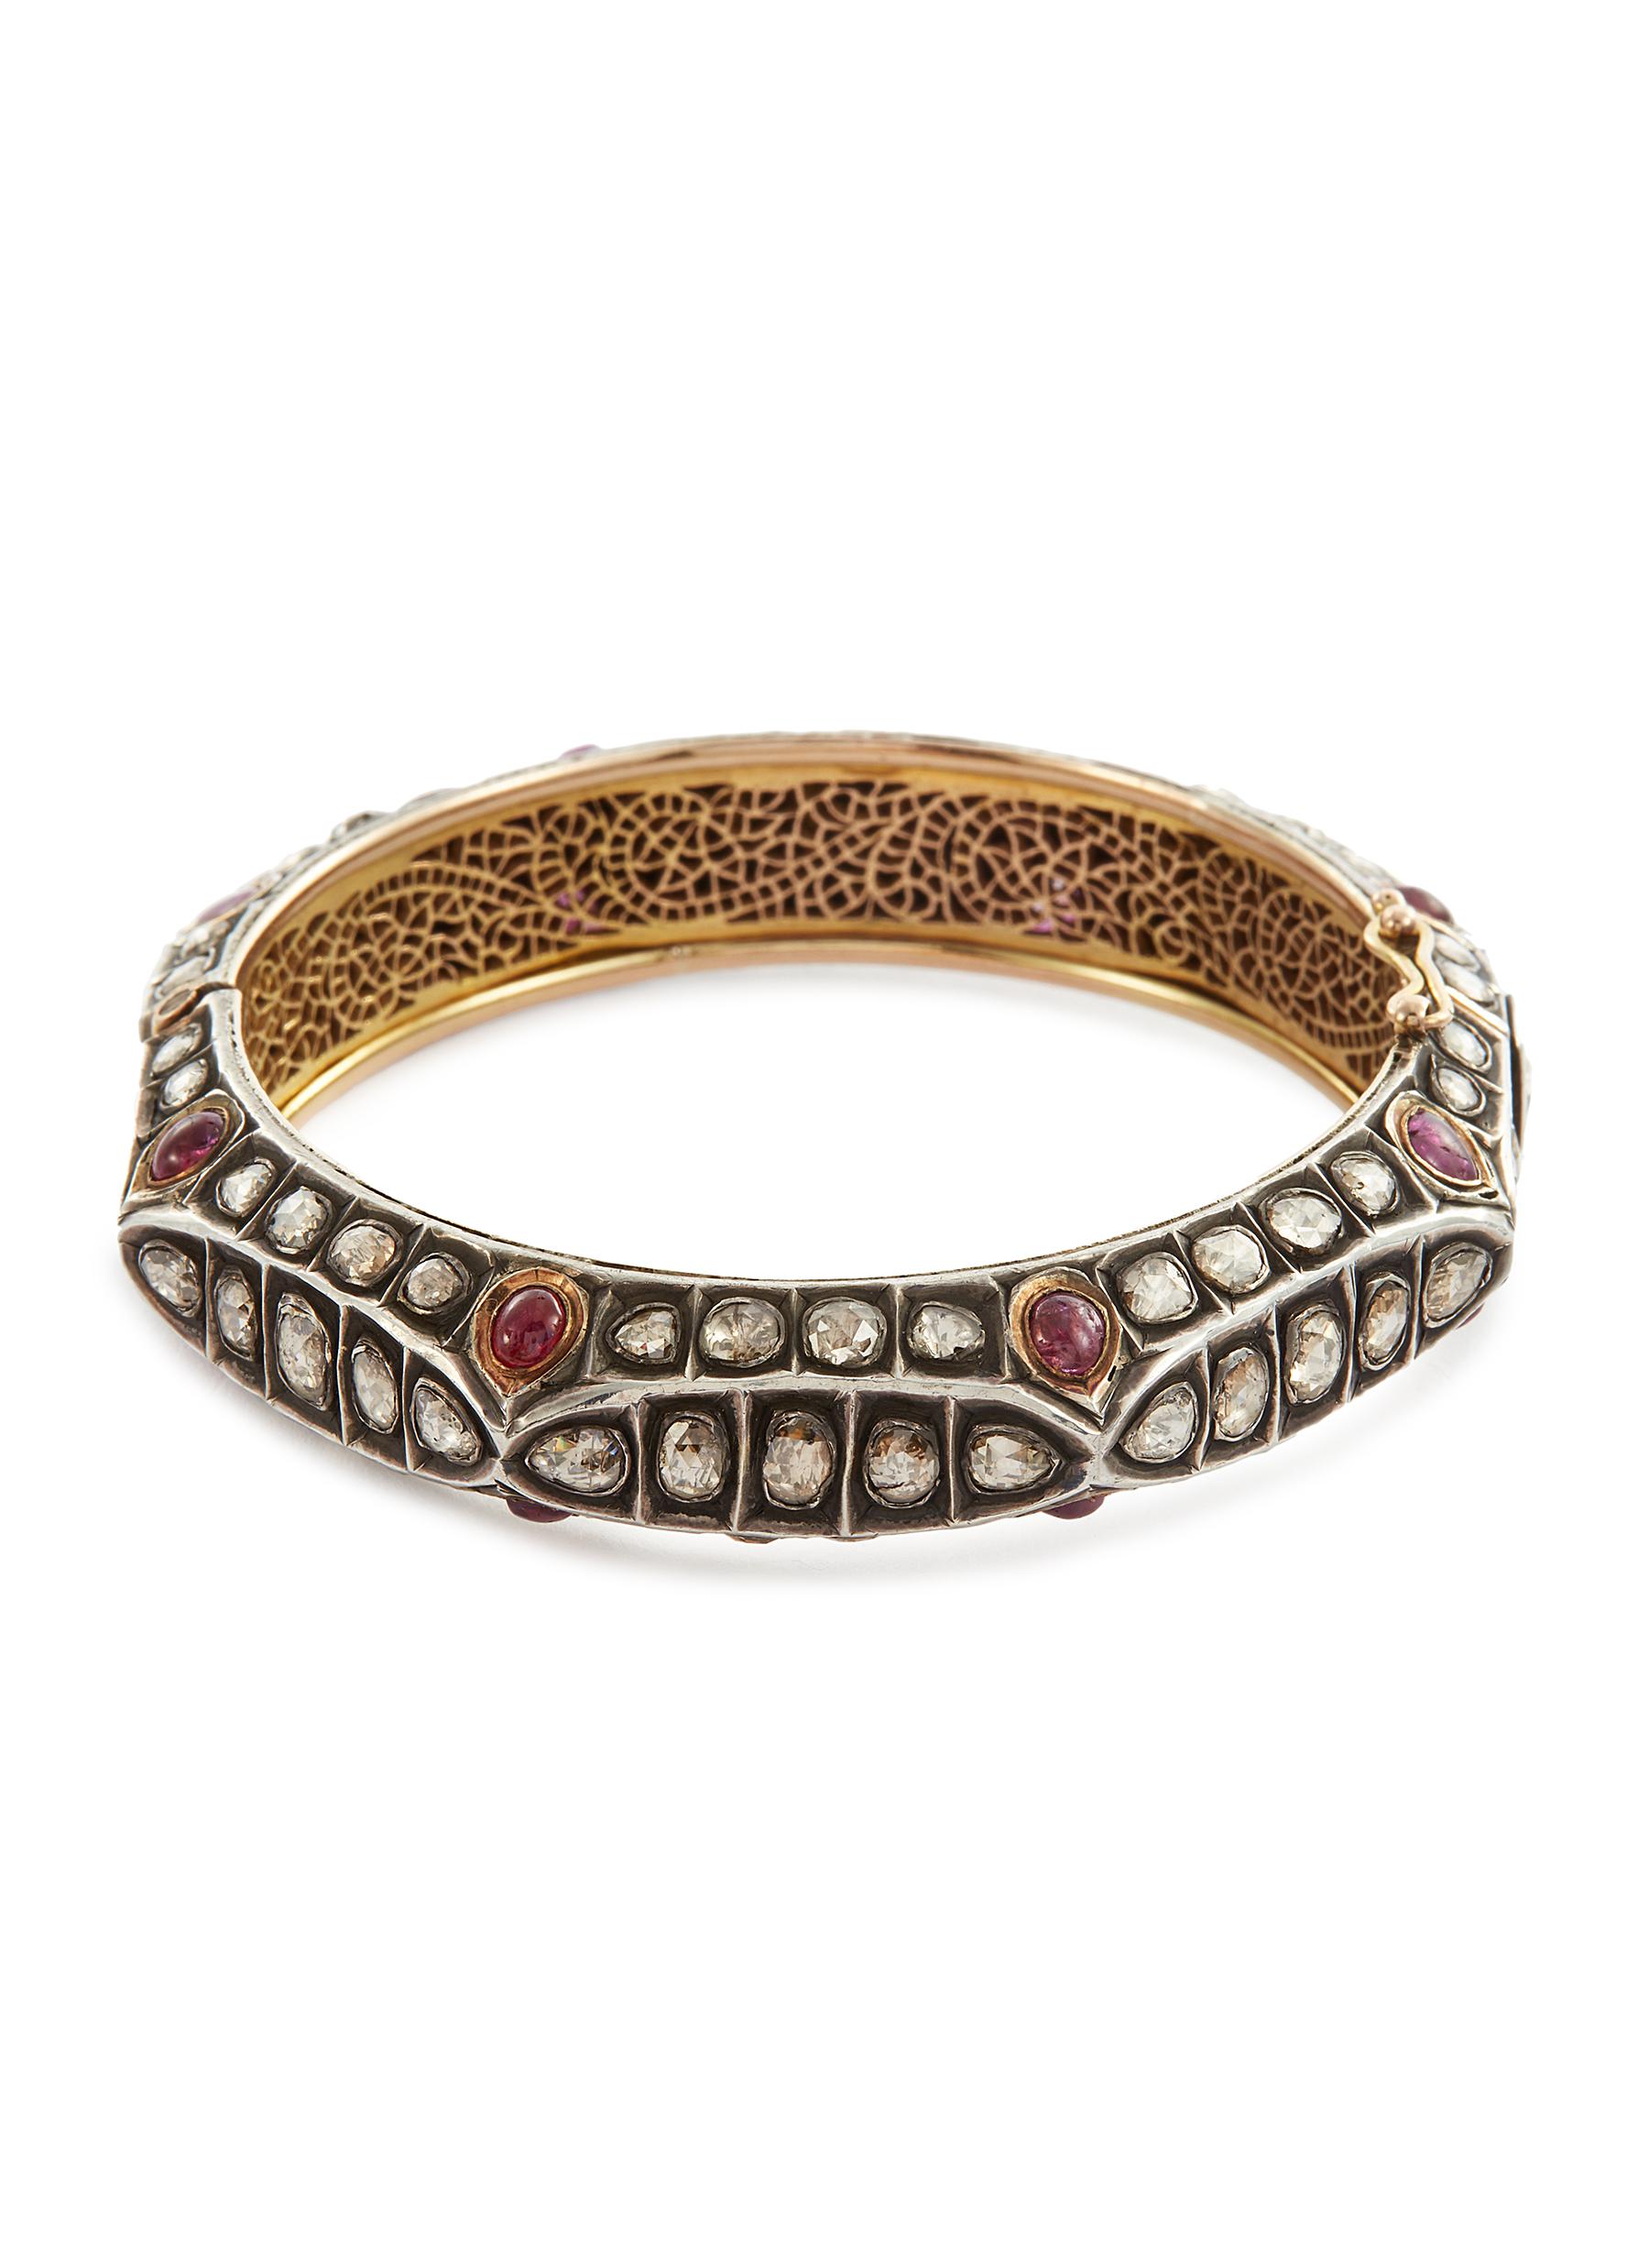 Buy TEEJH Aishwarya Gold Cuff Bracelet at Amazon.in